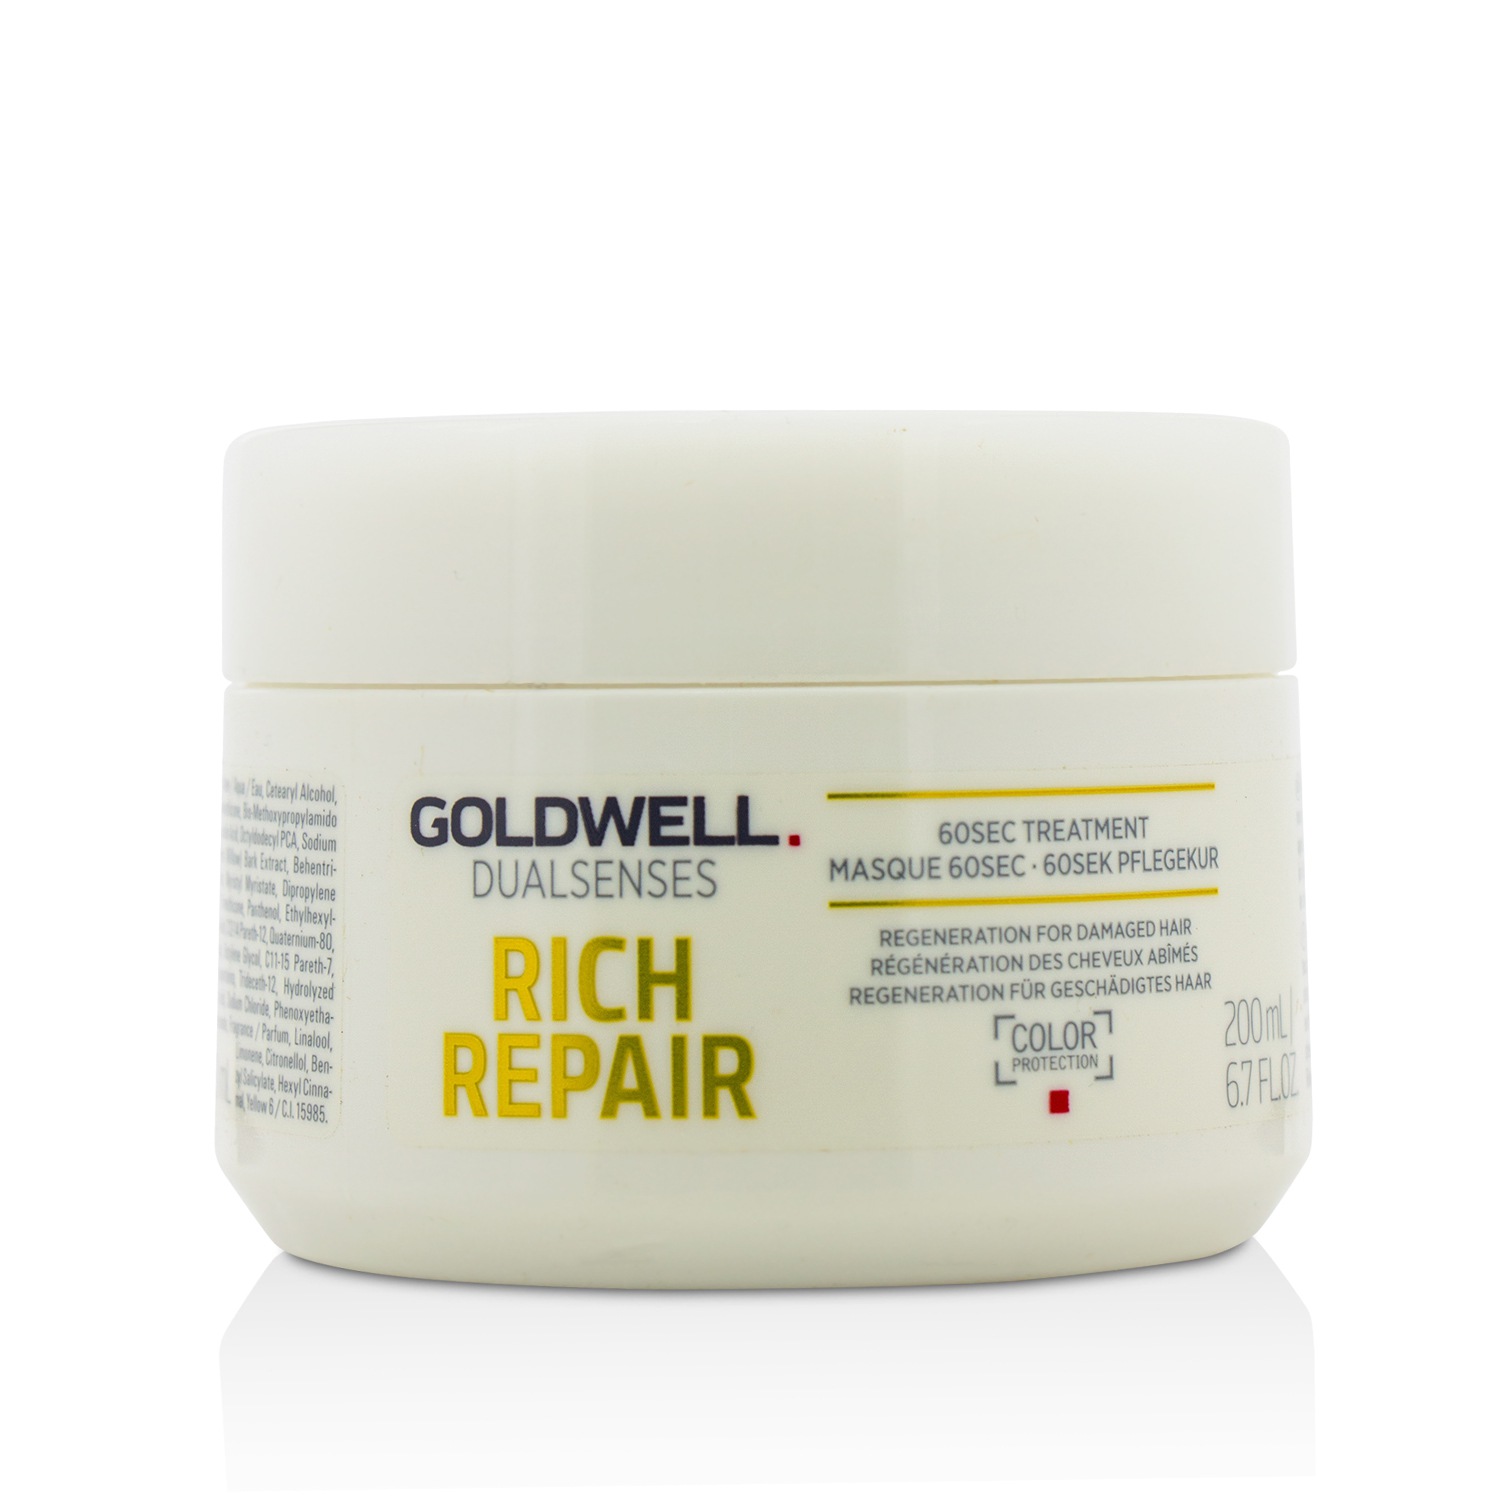 Dual Senses Rich Repair 60Sec Treatment (Regeneration For Damaged Hair) Goldwell Image